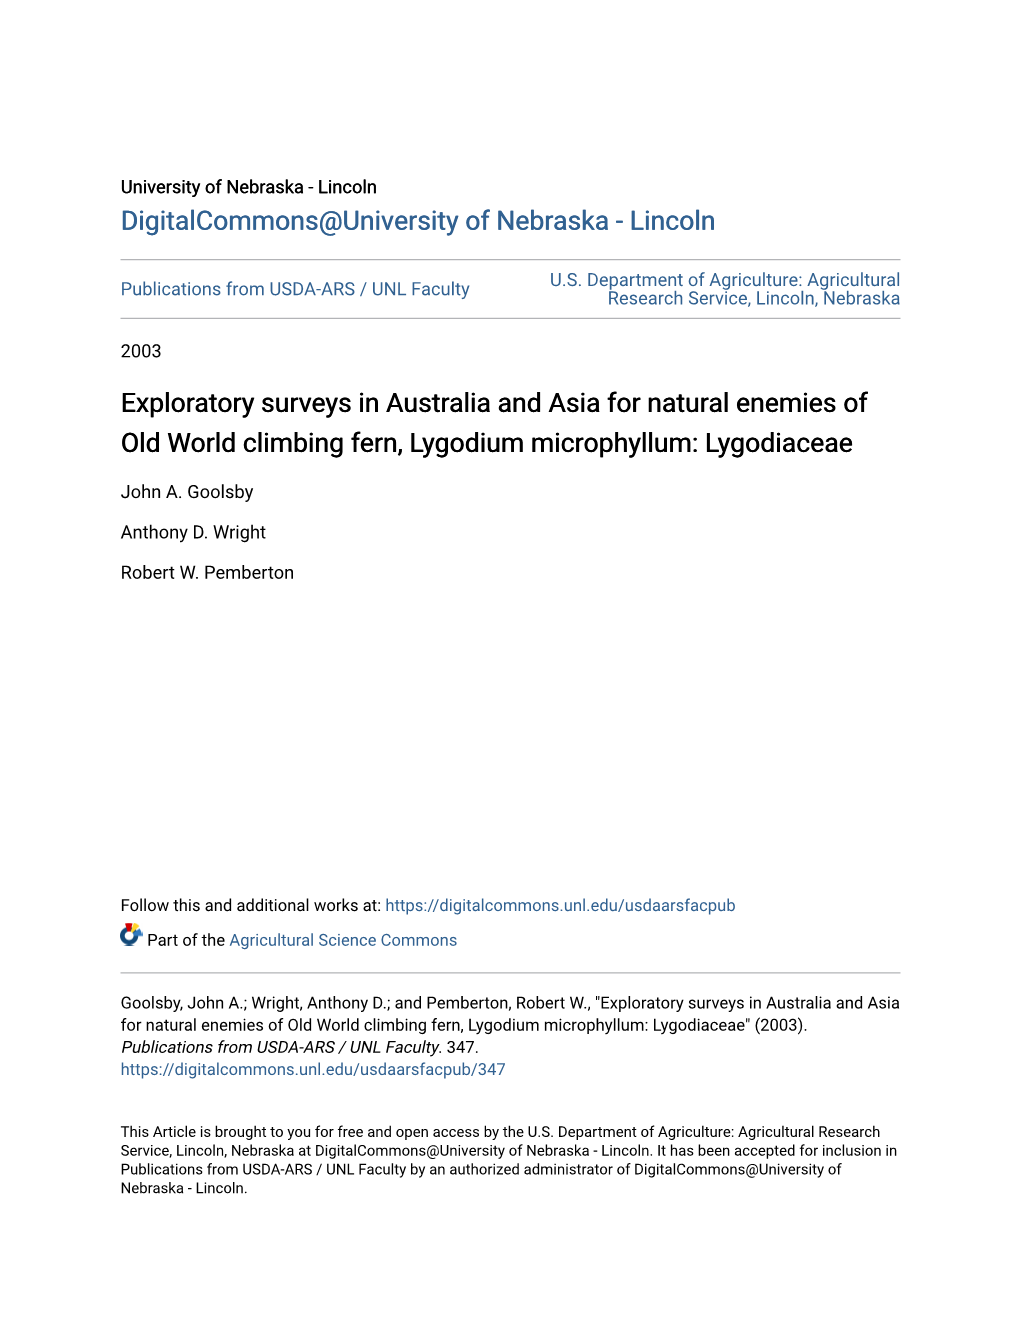 Exploratory Surveys in Australia and Asia for Natural Enemies of Old World Climbing Fern, Lygodium Microphyllum: Lygodiaceae